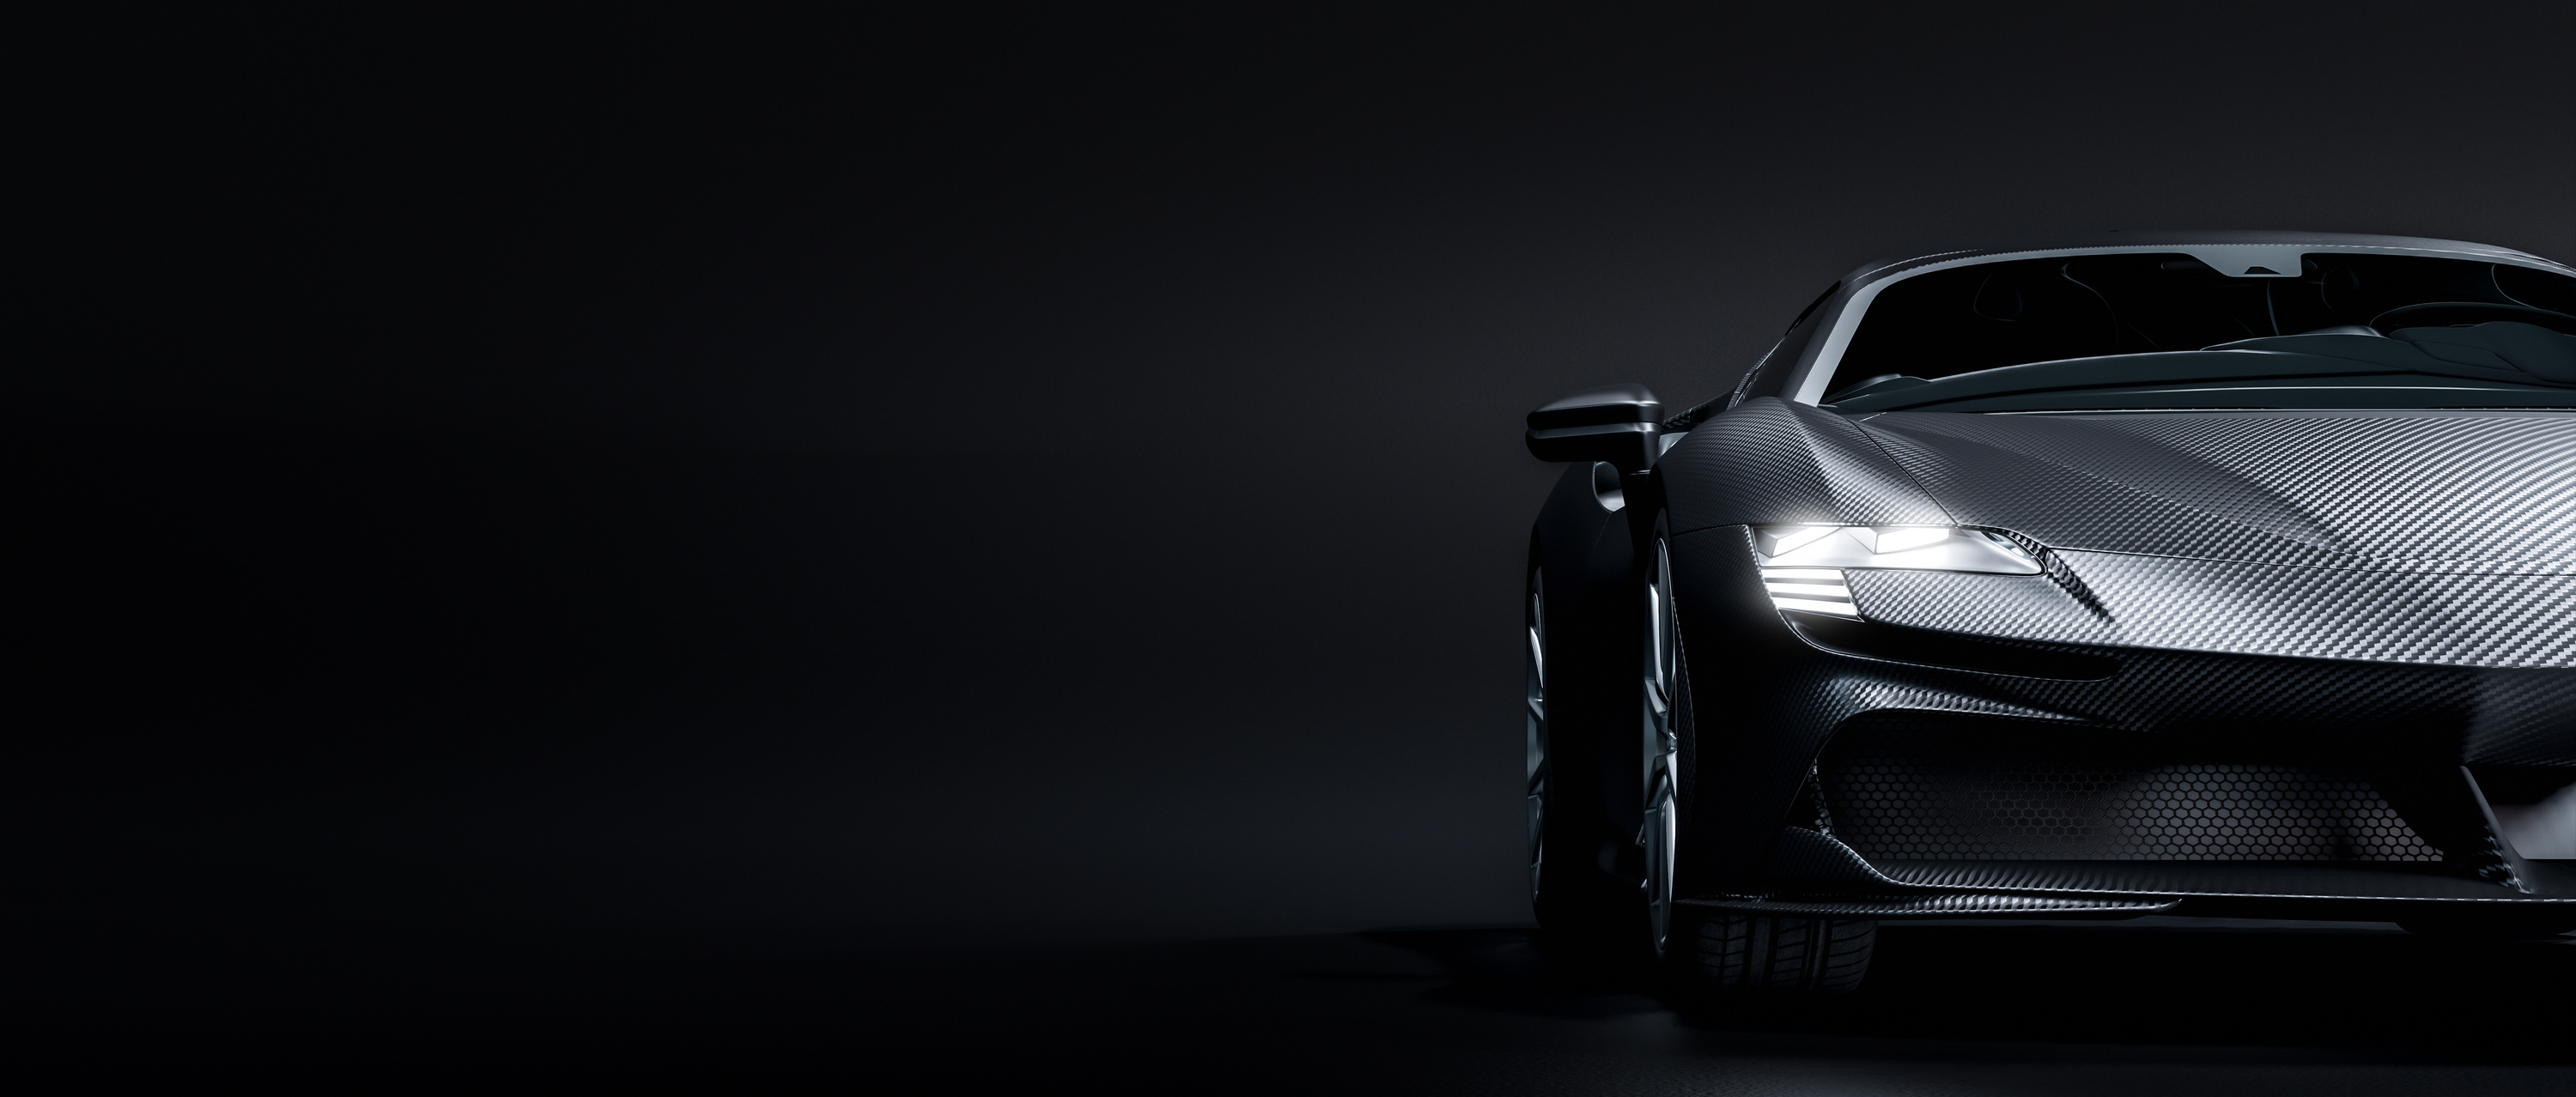 Carbon Fiber Luxury Sports Car.